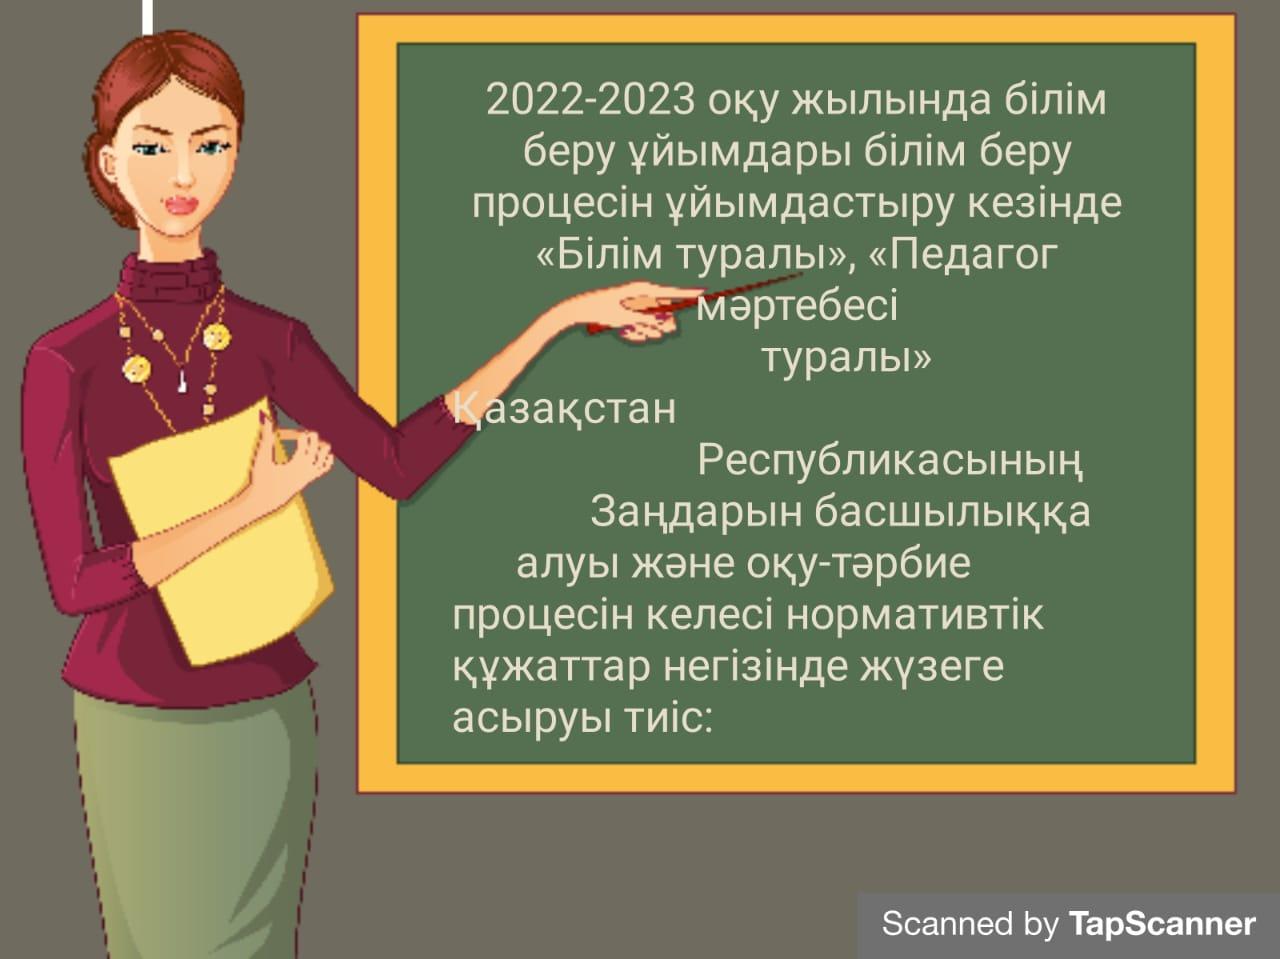 Нормативные документы 2022-2023 оқу жылы